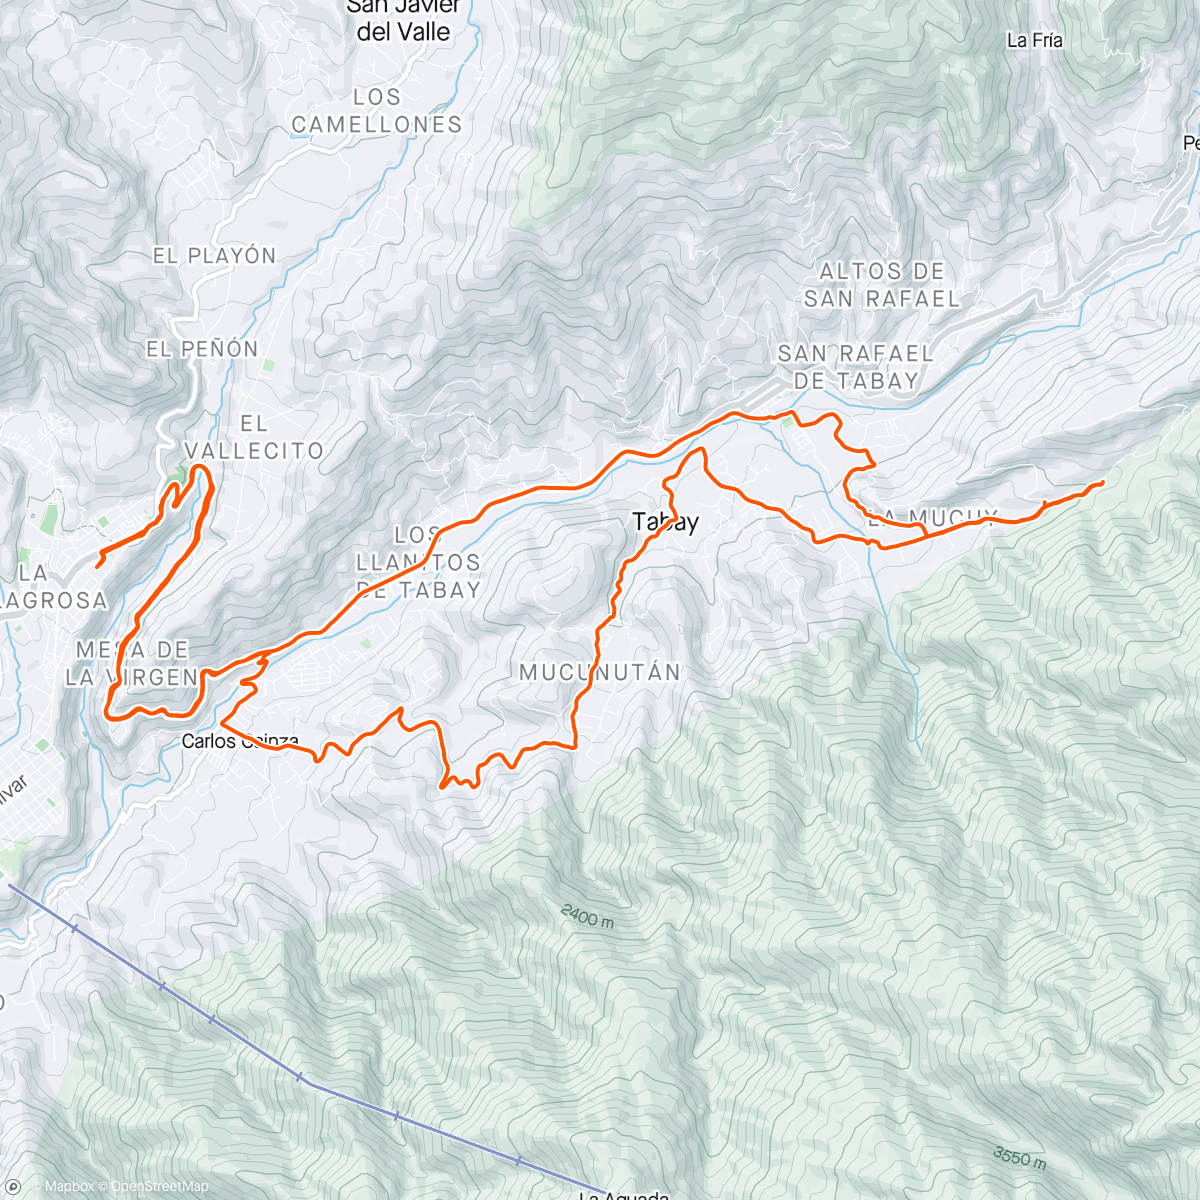 Map of the activity, Mucuy Alta - Mucunutan - Vuelta de Lola